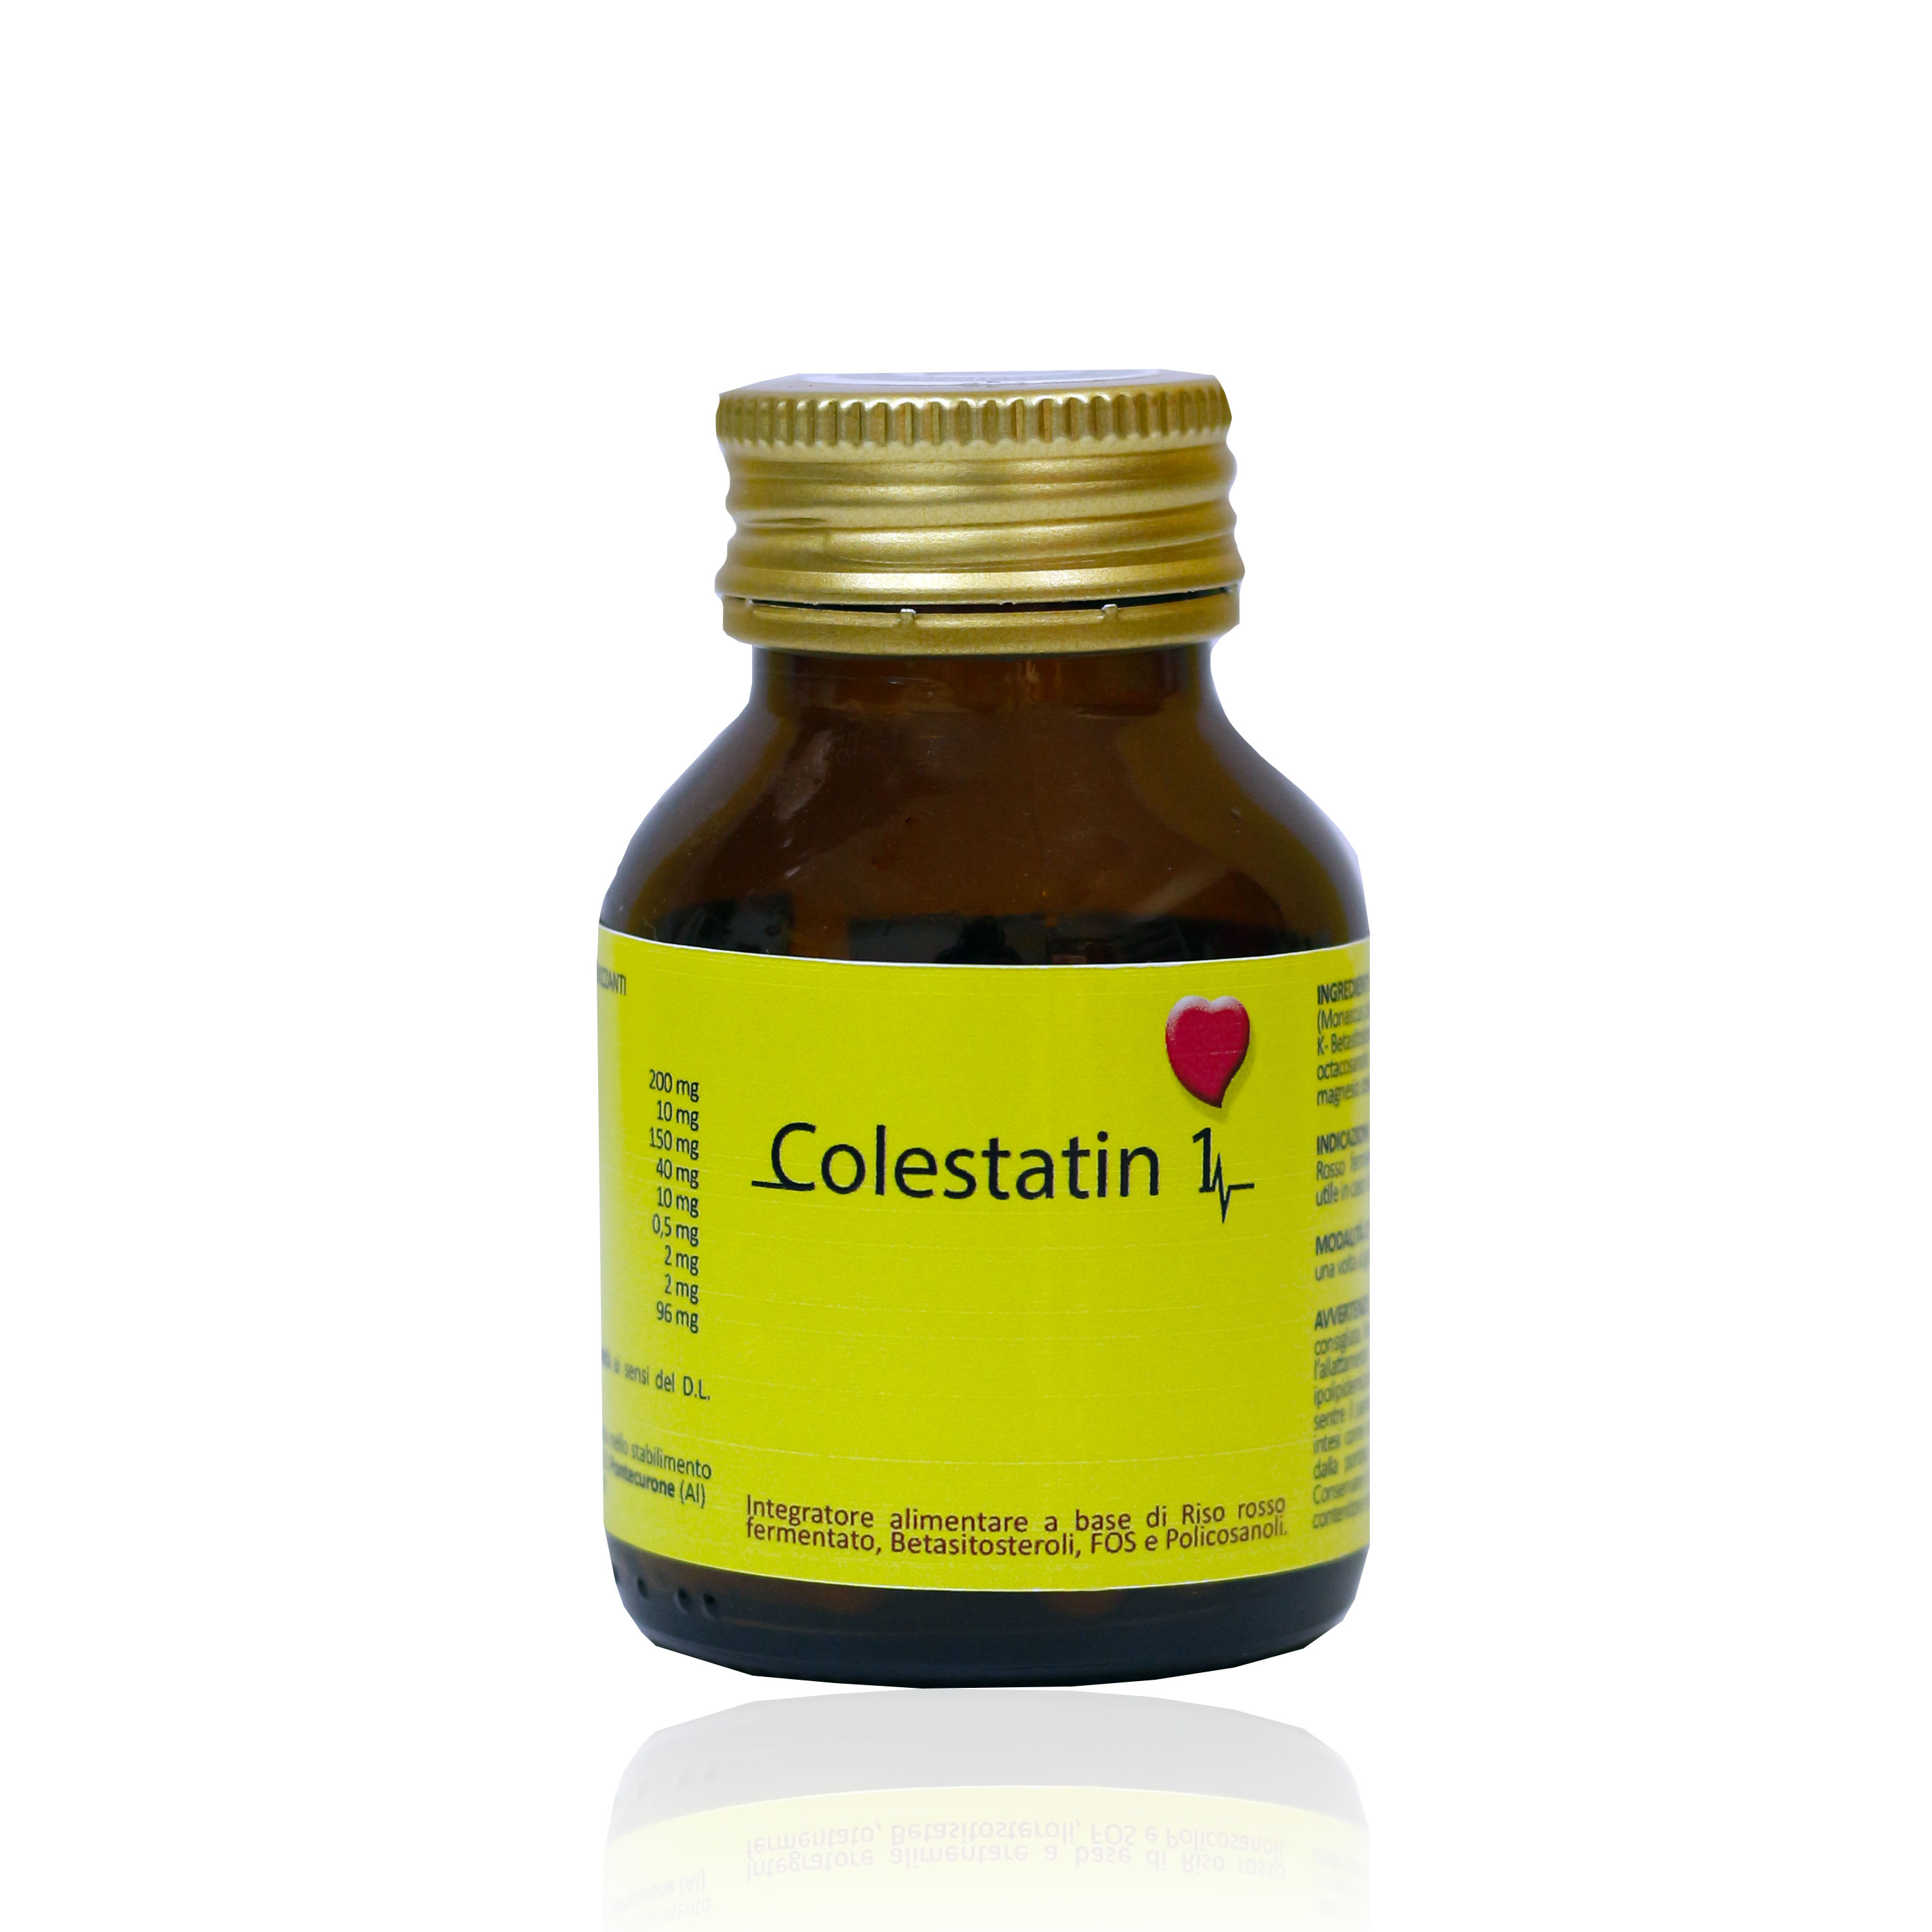 Colestatin